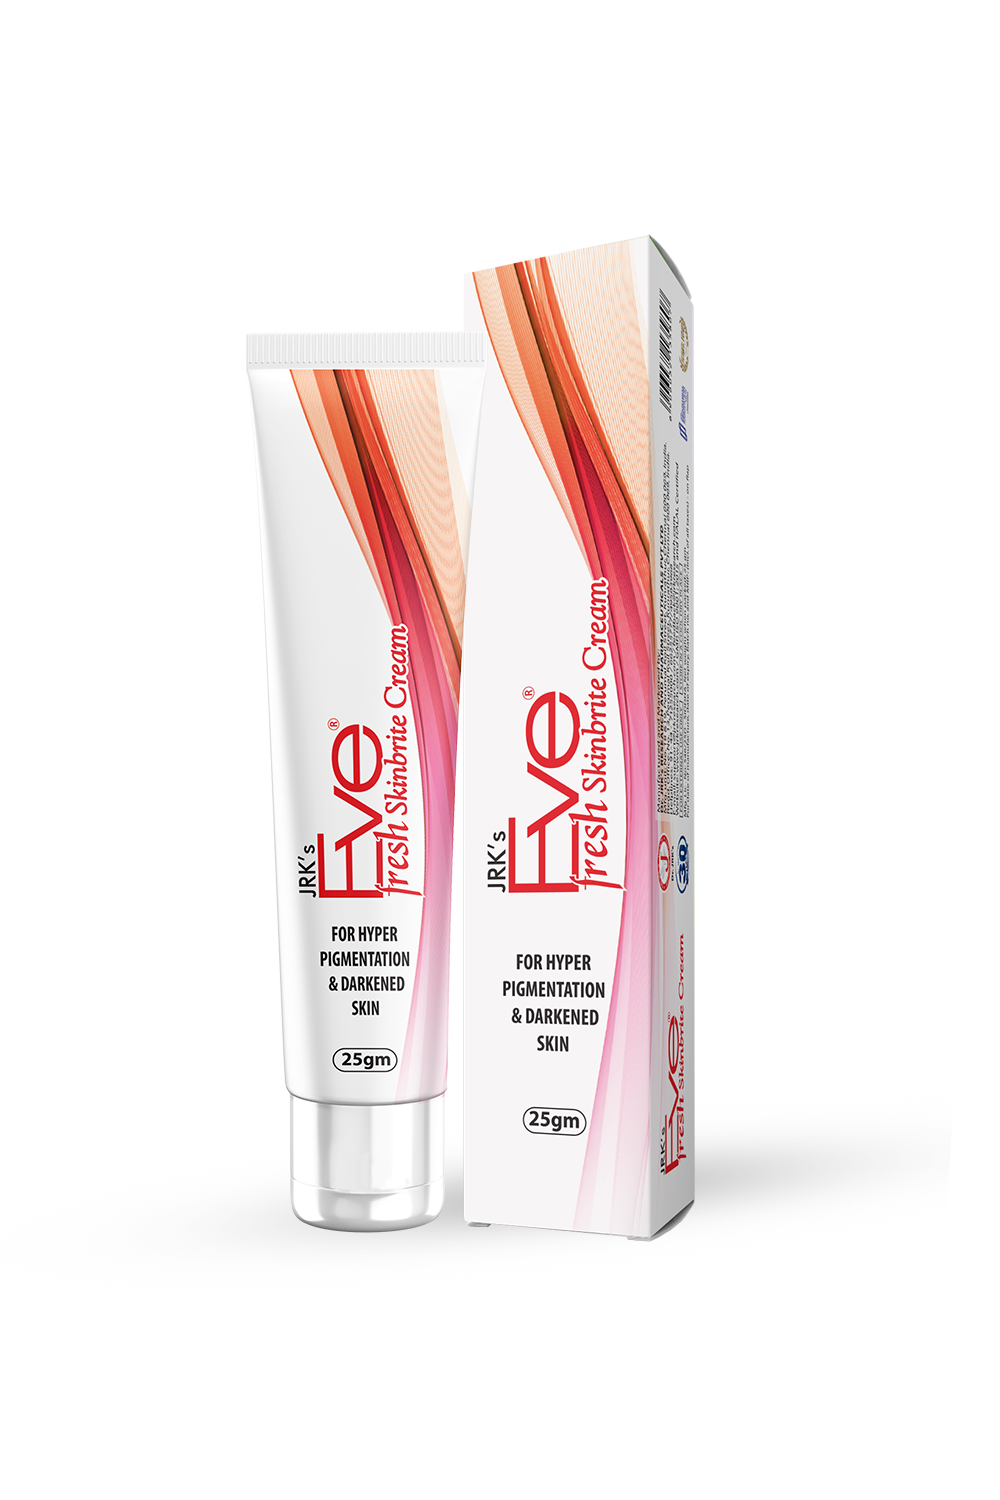 Eve fresh skinbite cream 25 gm | Hyperpigmentation, skin blemishes, post pimple marks